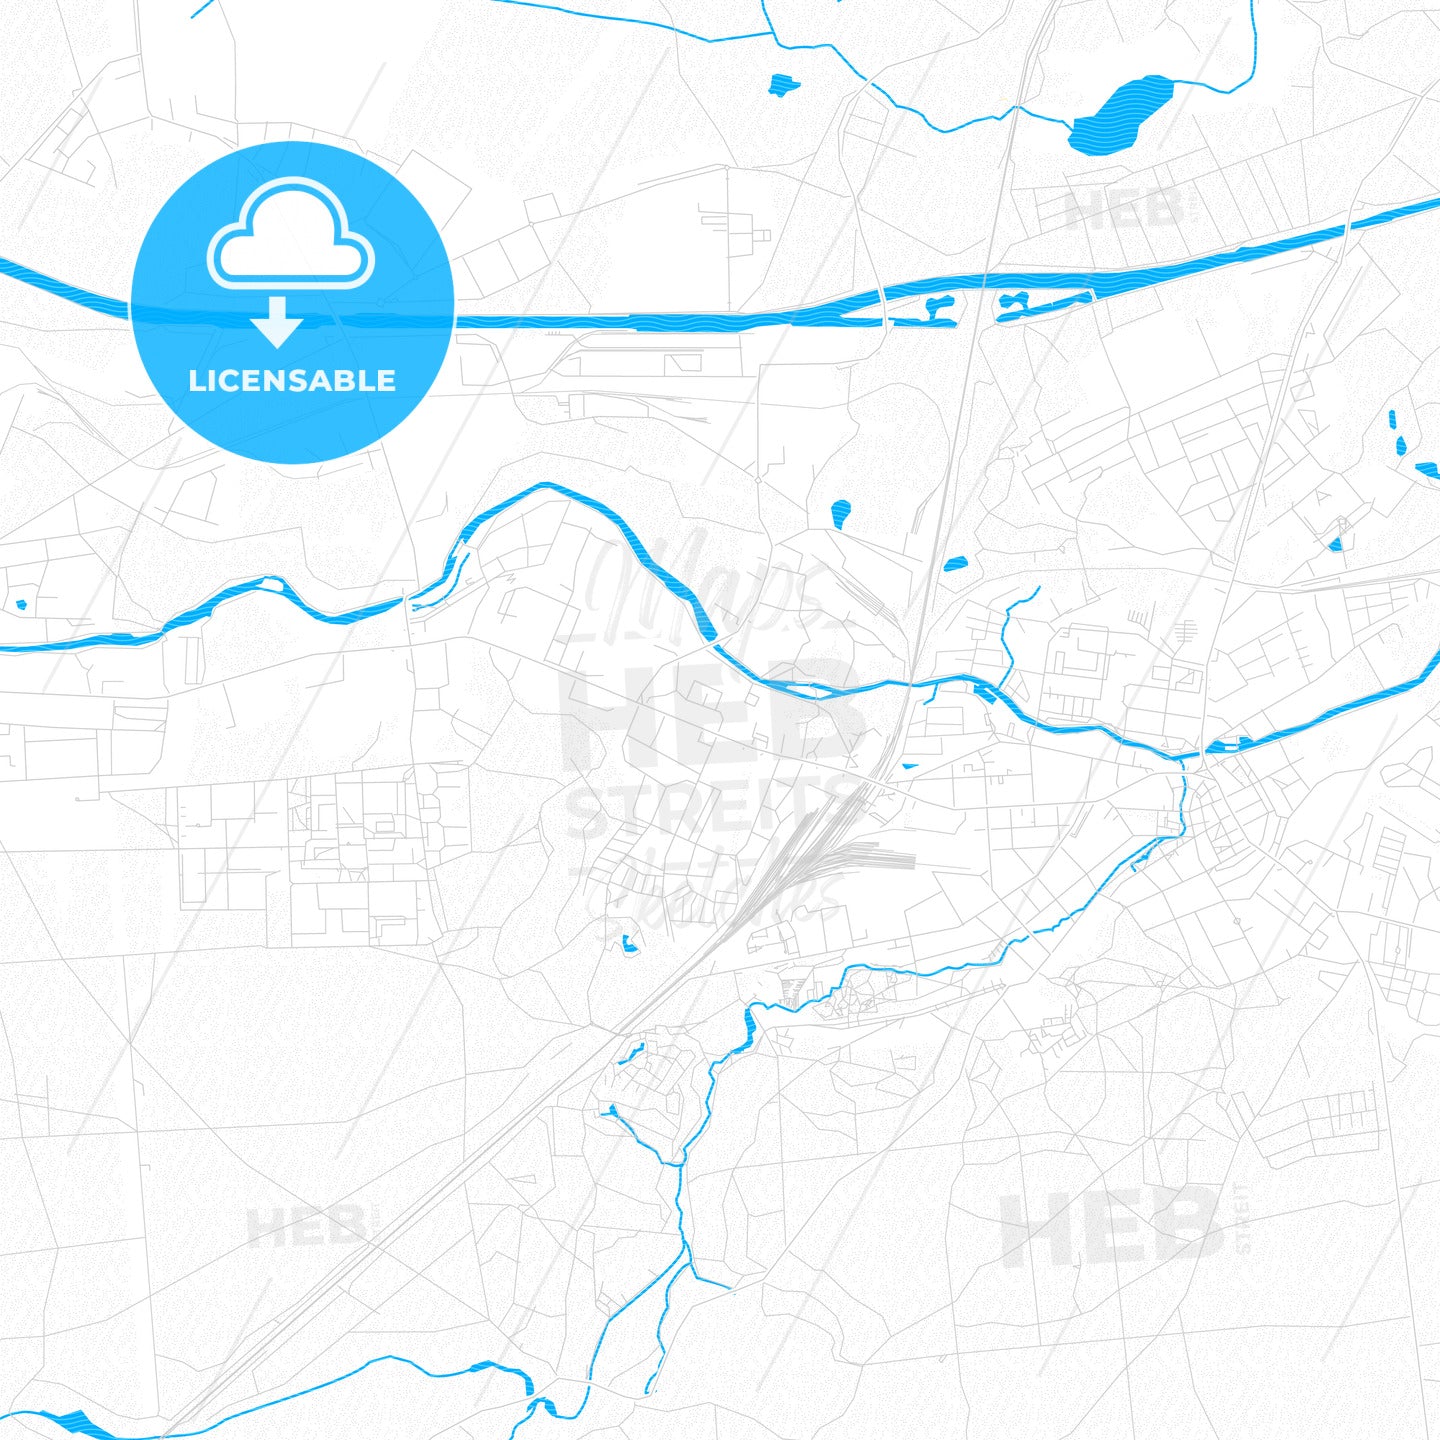 Eberswalde, Germany PDF vector map with water in focus